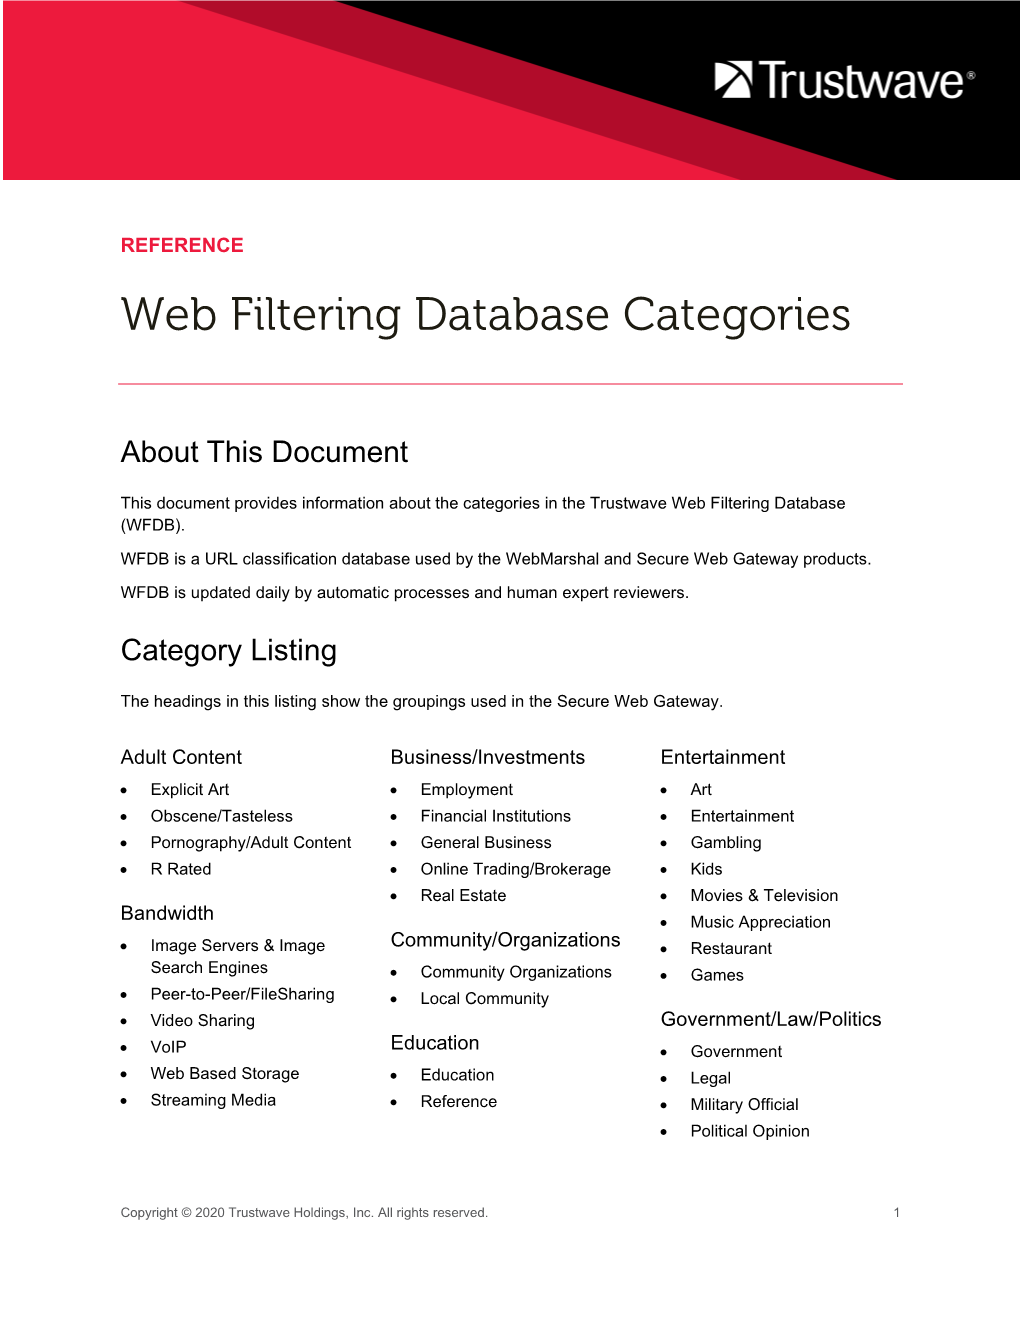 Trustwave Web Filtering Database Categories - March 19, 2020